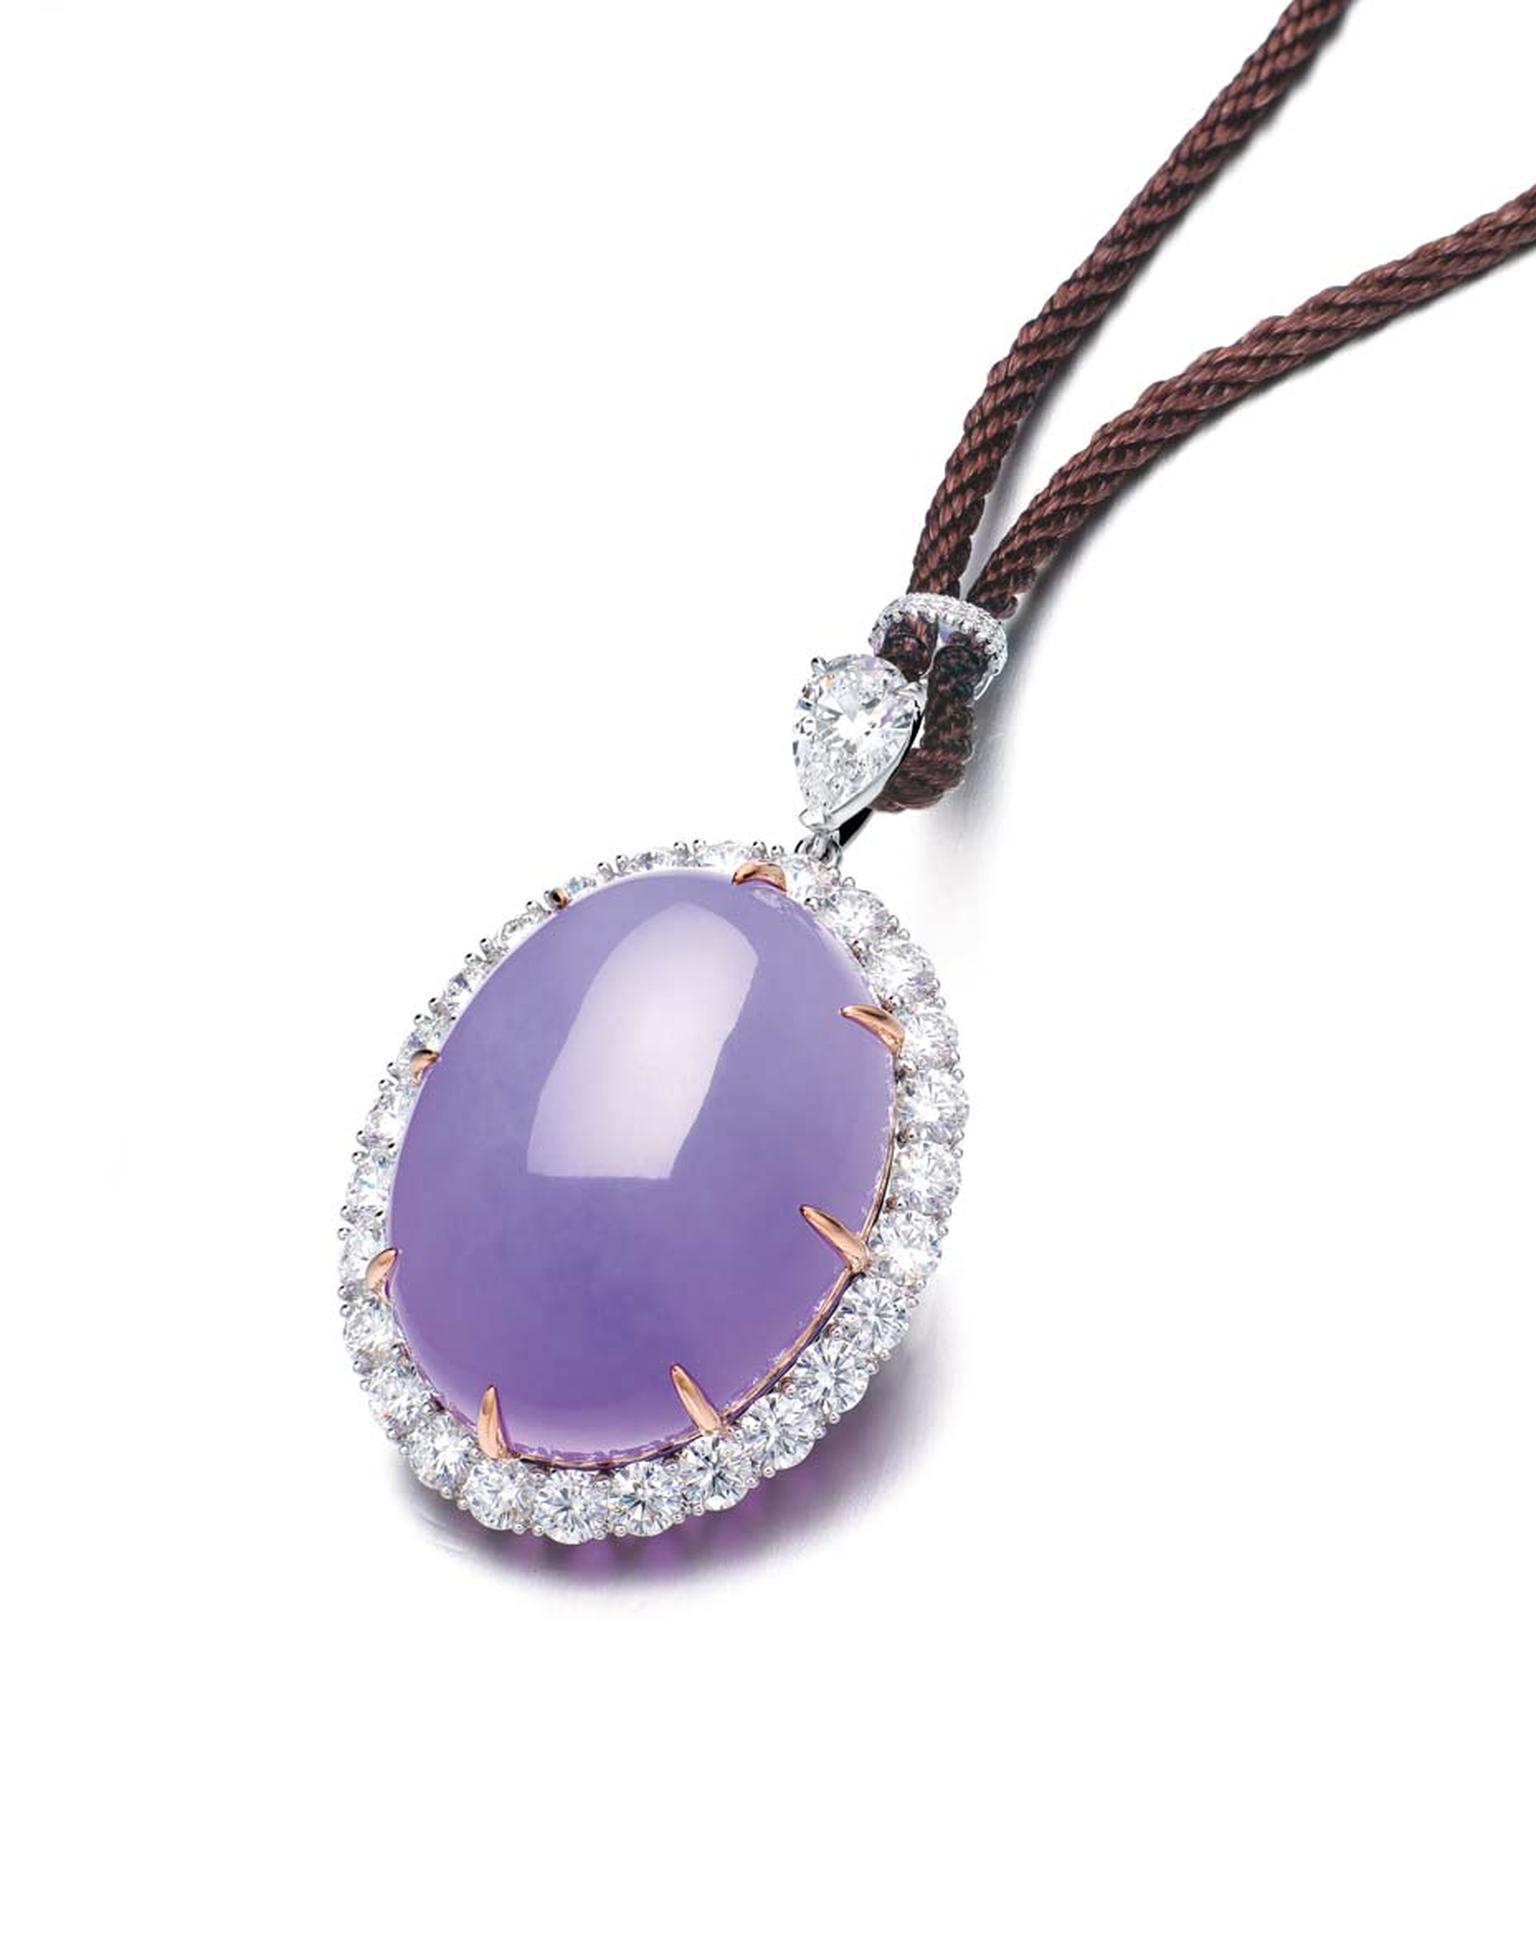 Chow Tai Fook lavender jadeite and diamond pendant necklace (estimate: US$350,000-480,000)